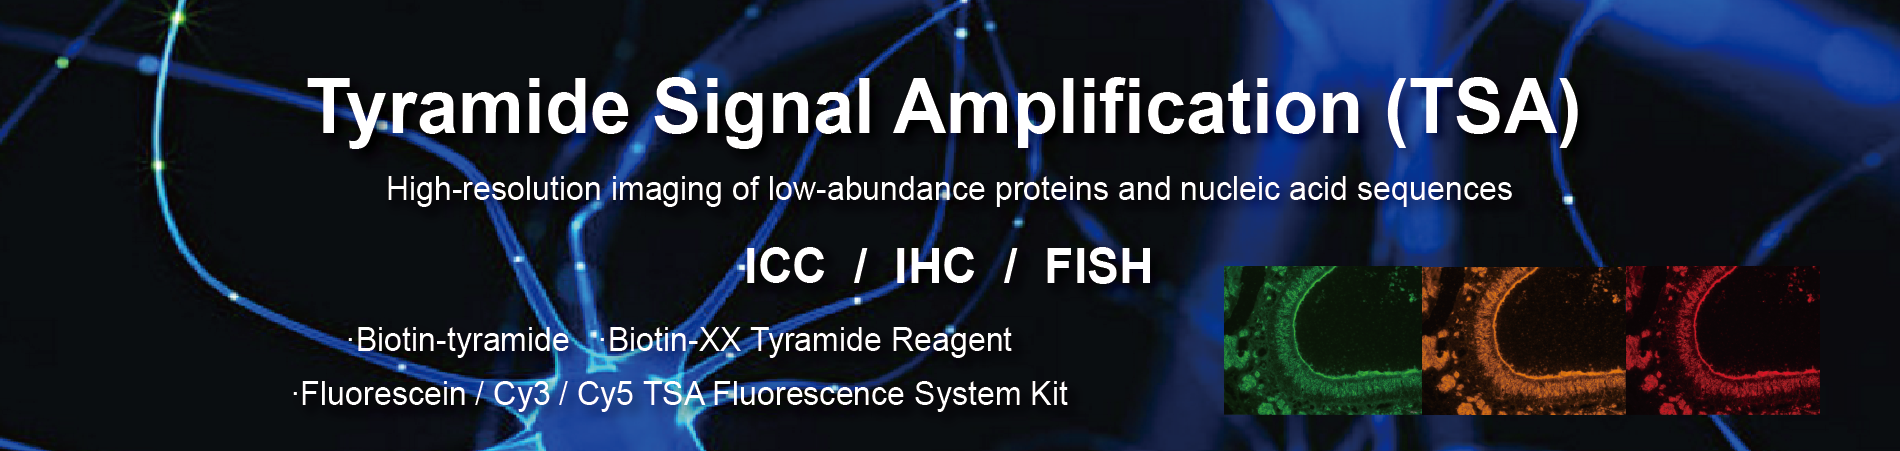 Tyramine Signal Amplification (TSA) Series